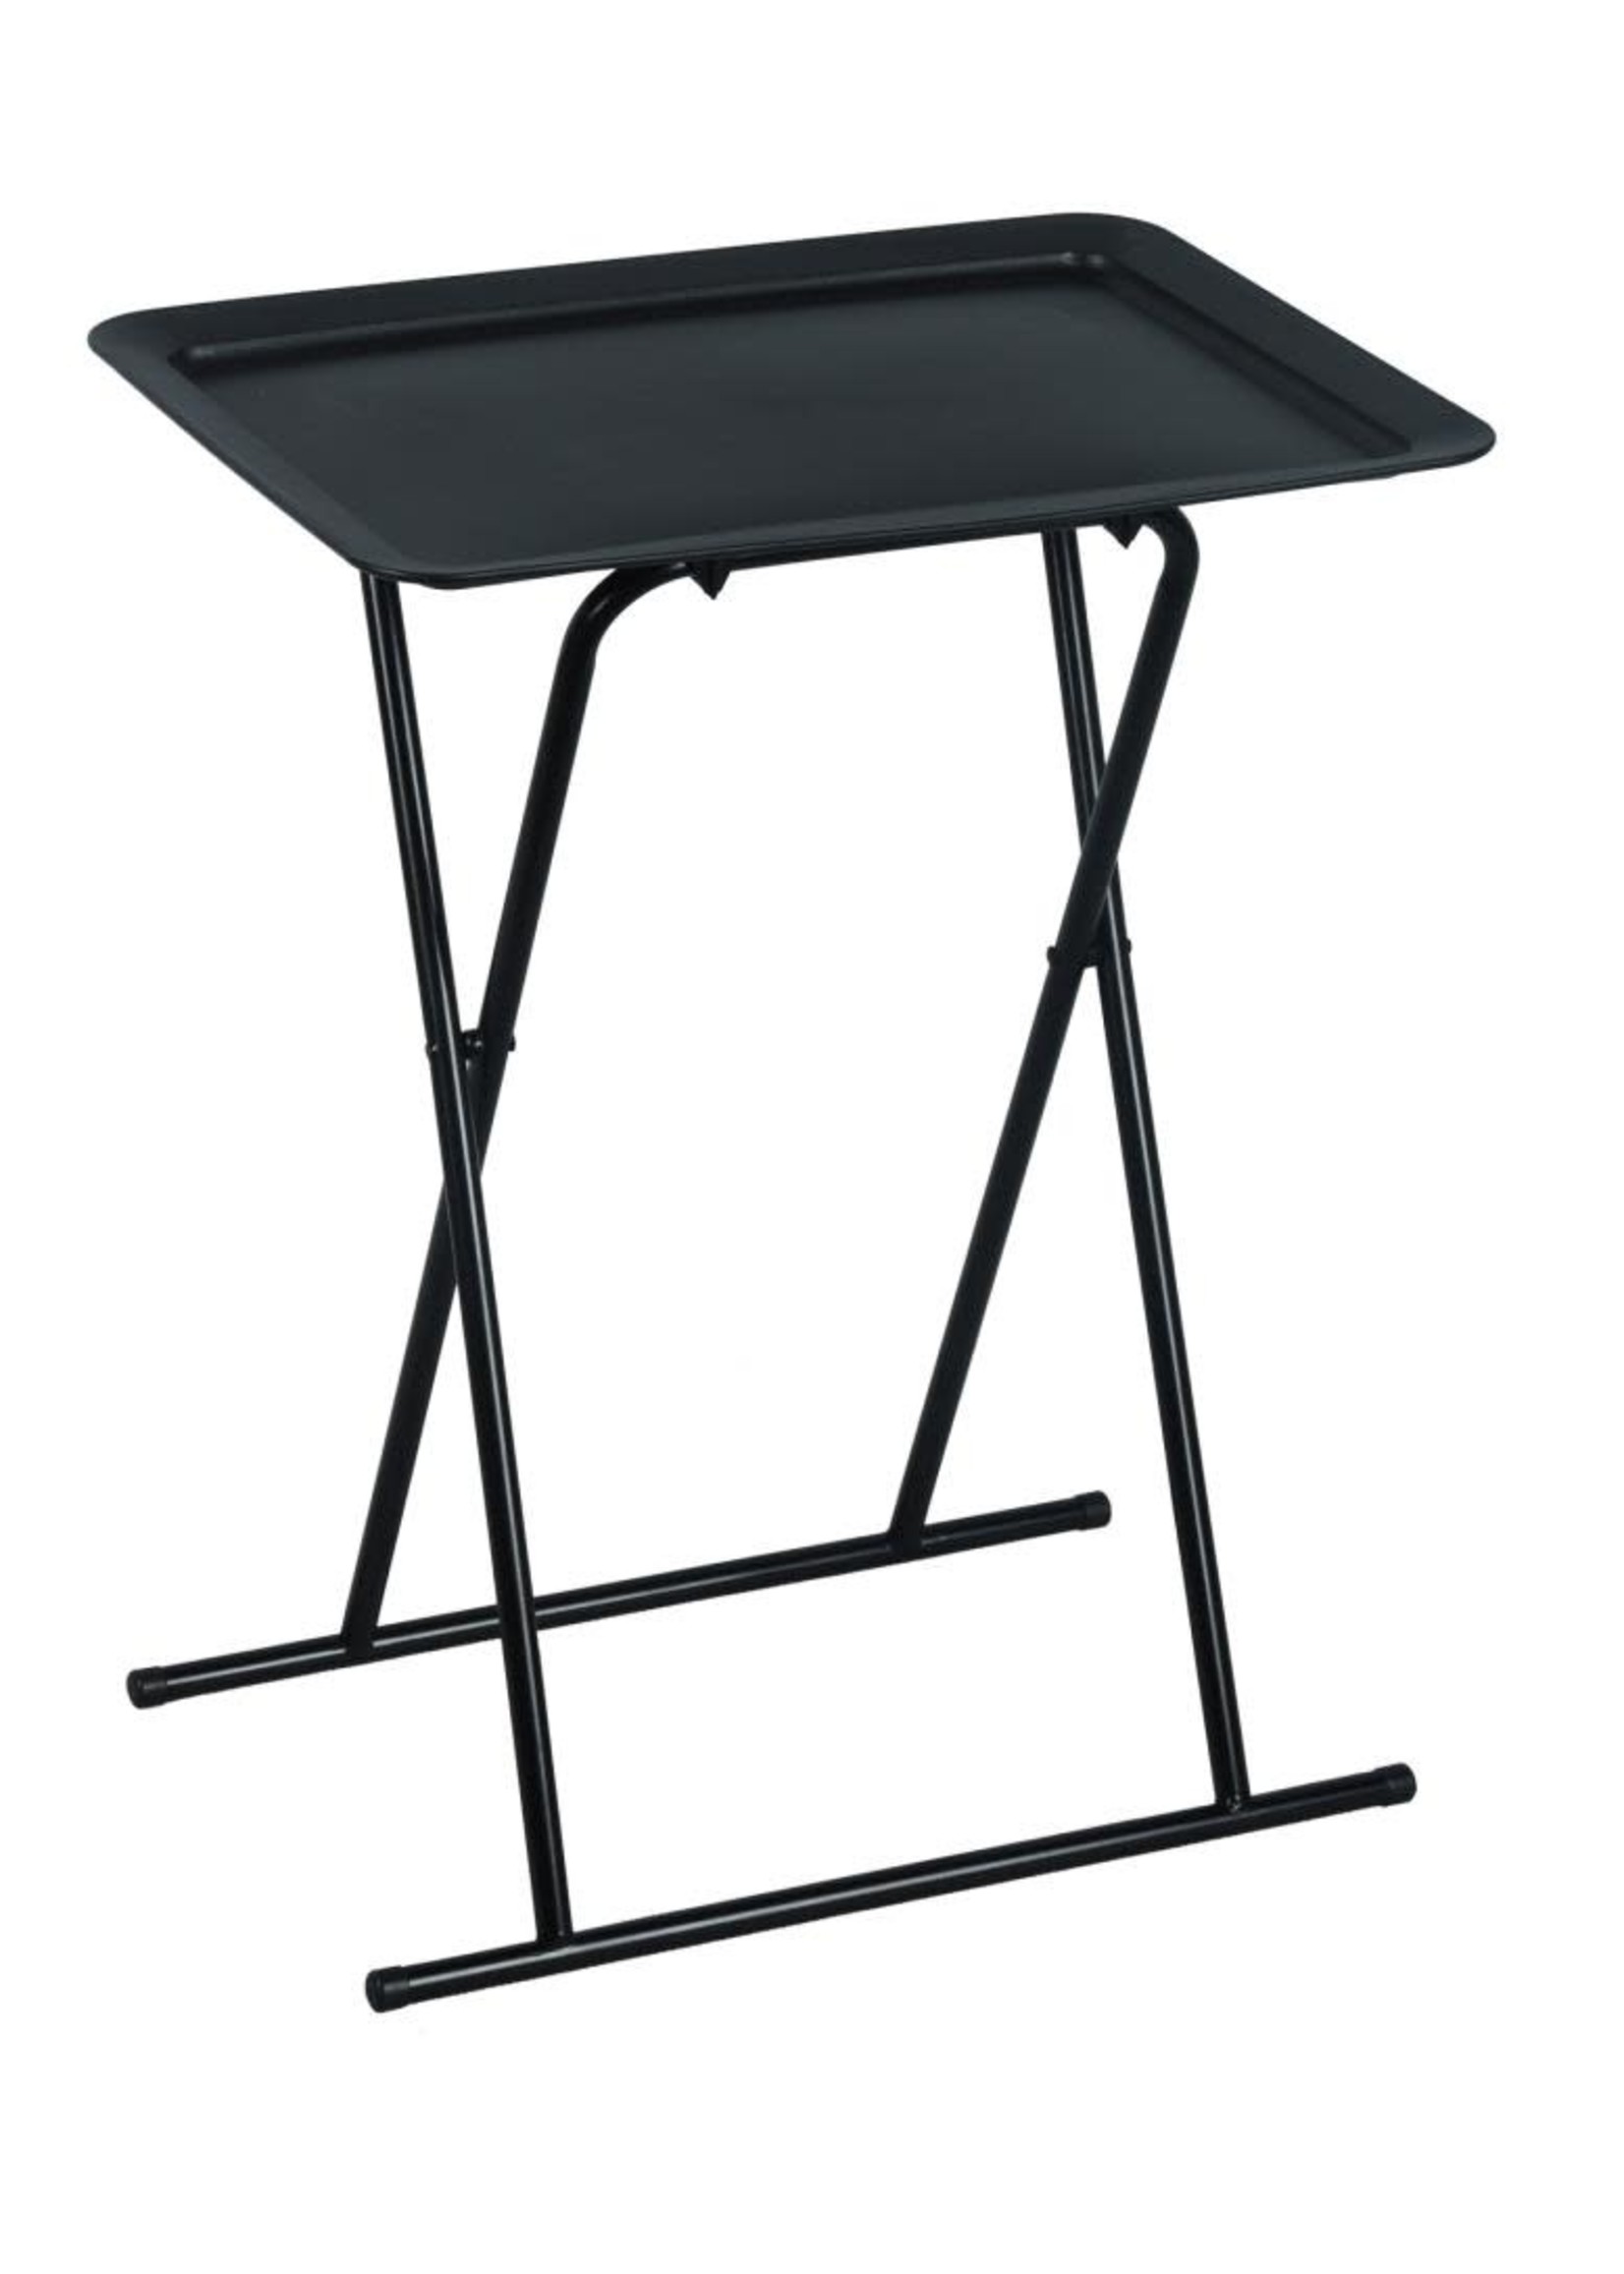 ITY INTERNATIONAL Black Folding Table, Side Tray Table